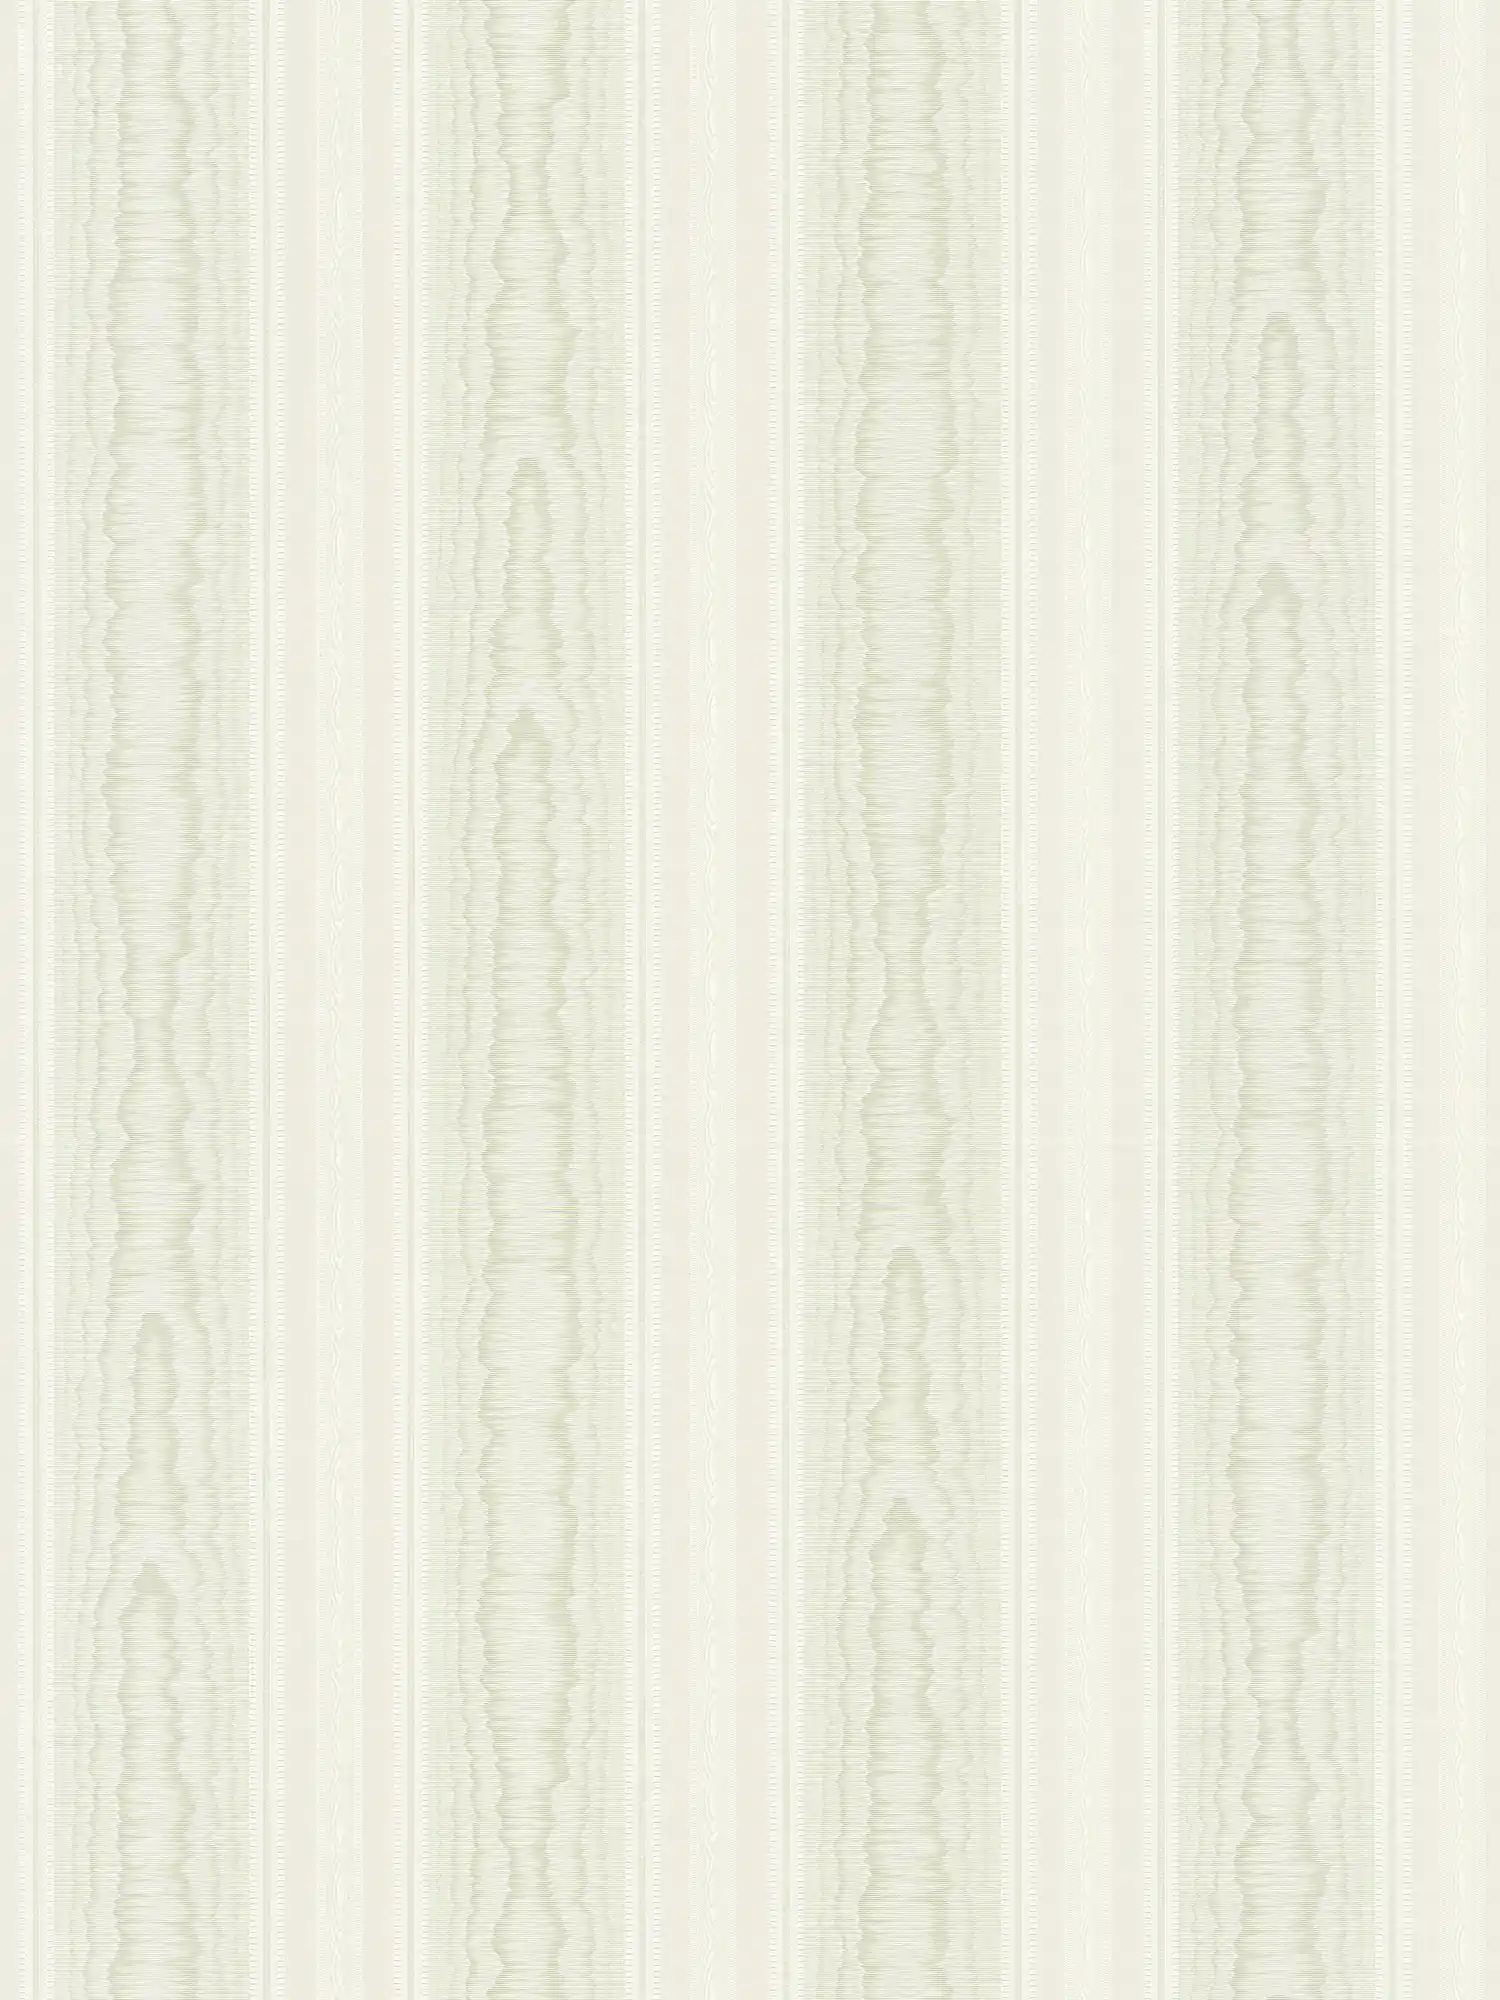 Luxury stripes wallpaper with moiré design - green, white
